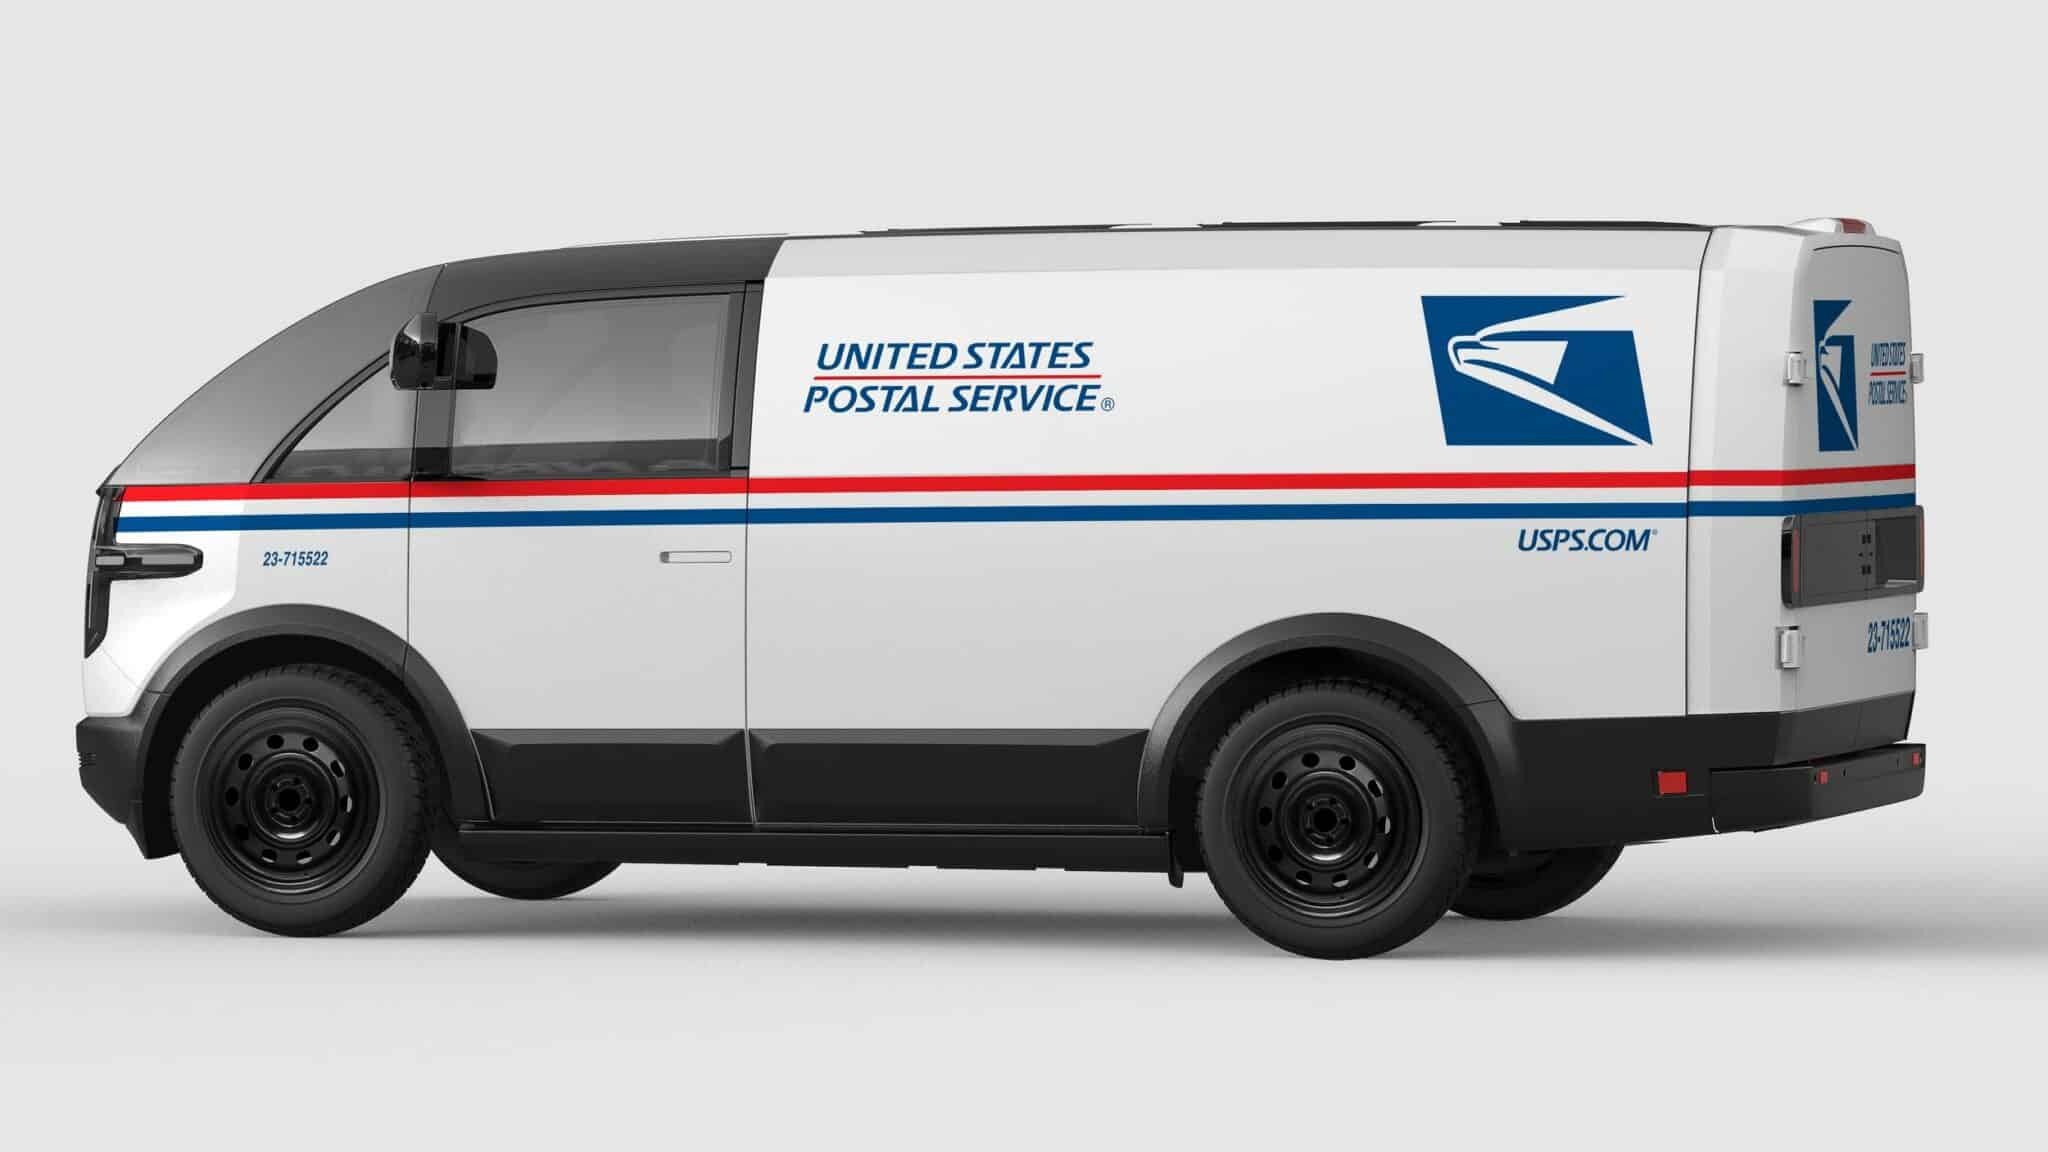 Après la NASA, Canoo va équiper le service postal américain avec ses navettes électriques